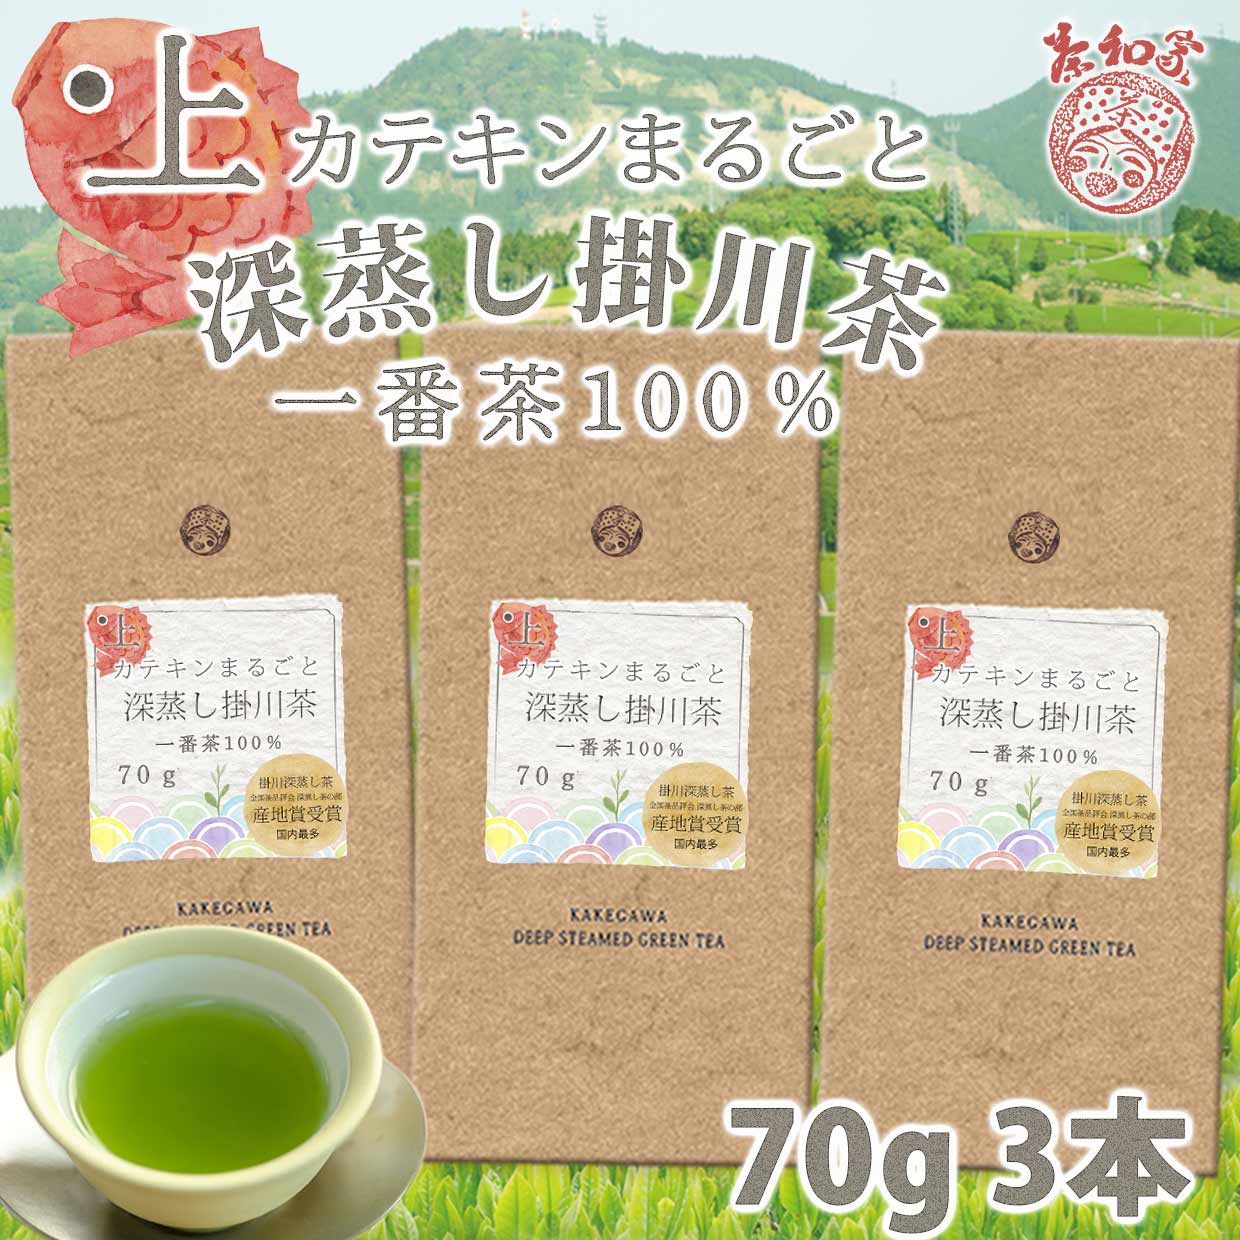 Chawaya Whole Catechin Deep Steamed Kakegawa Tea 100g x 3 bottles